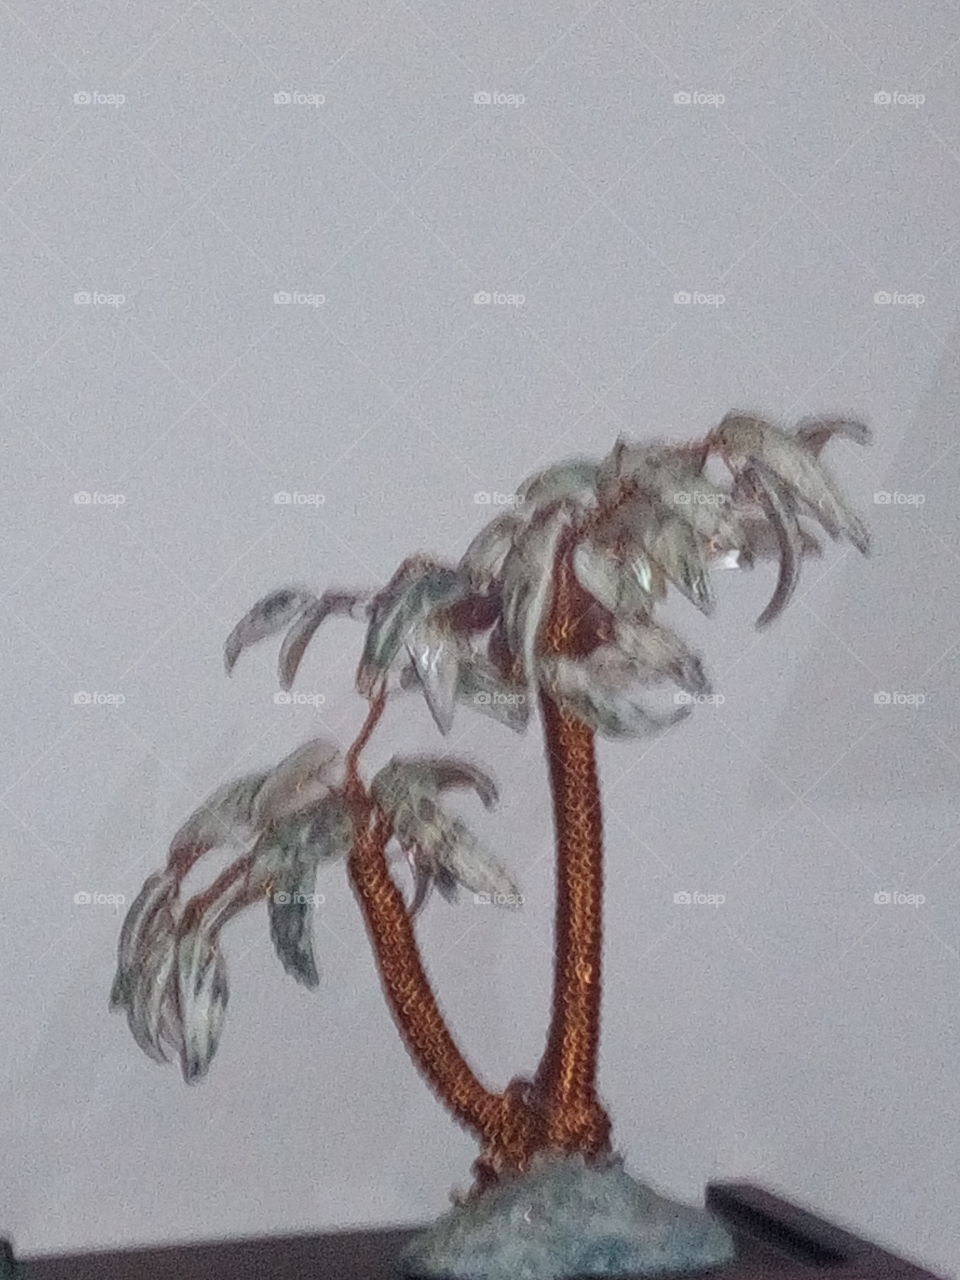 bonsai artifact